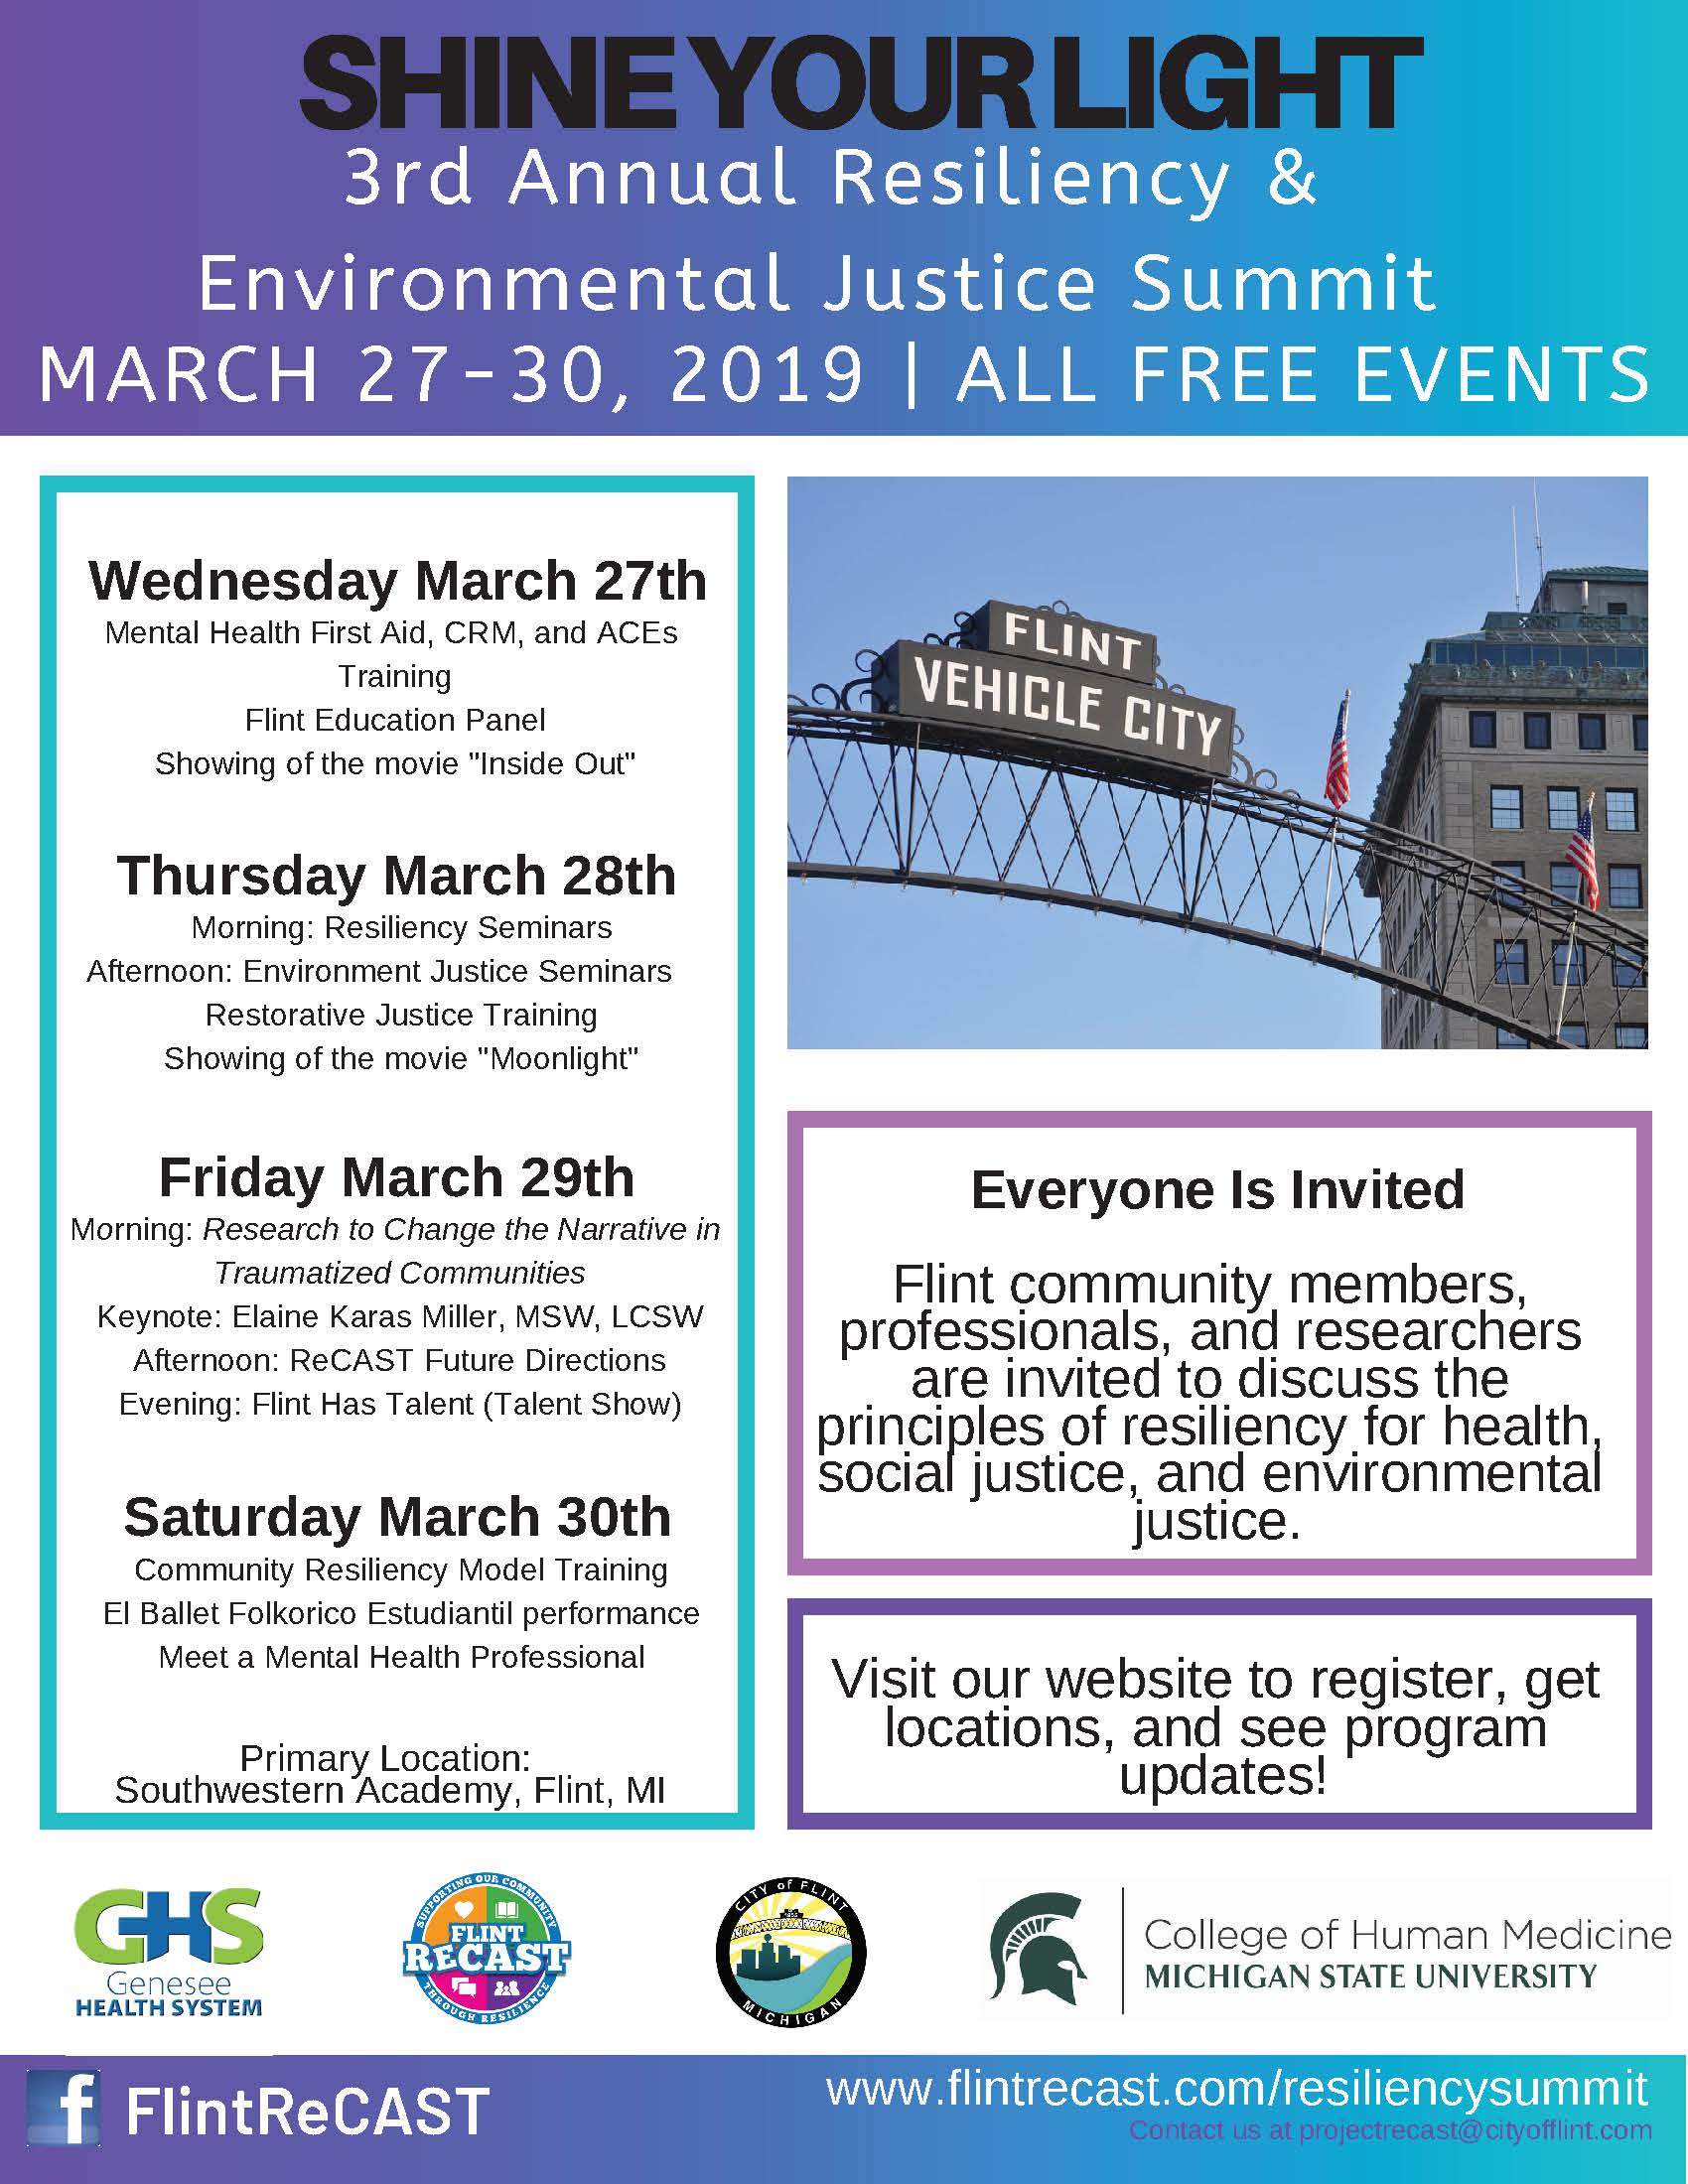 3rd Annual Flint Resiliency & Environmental Justice Summit